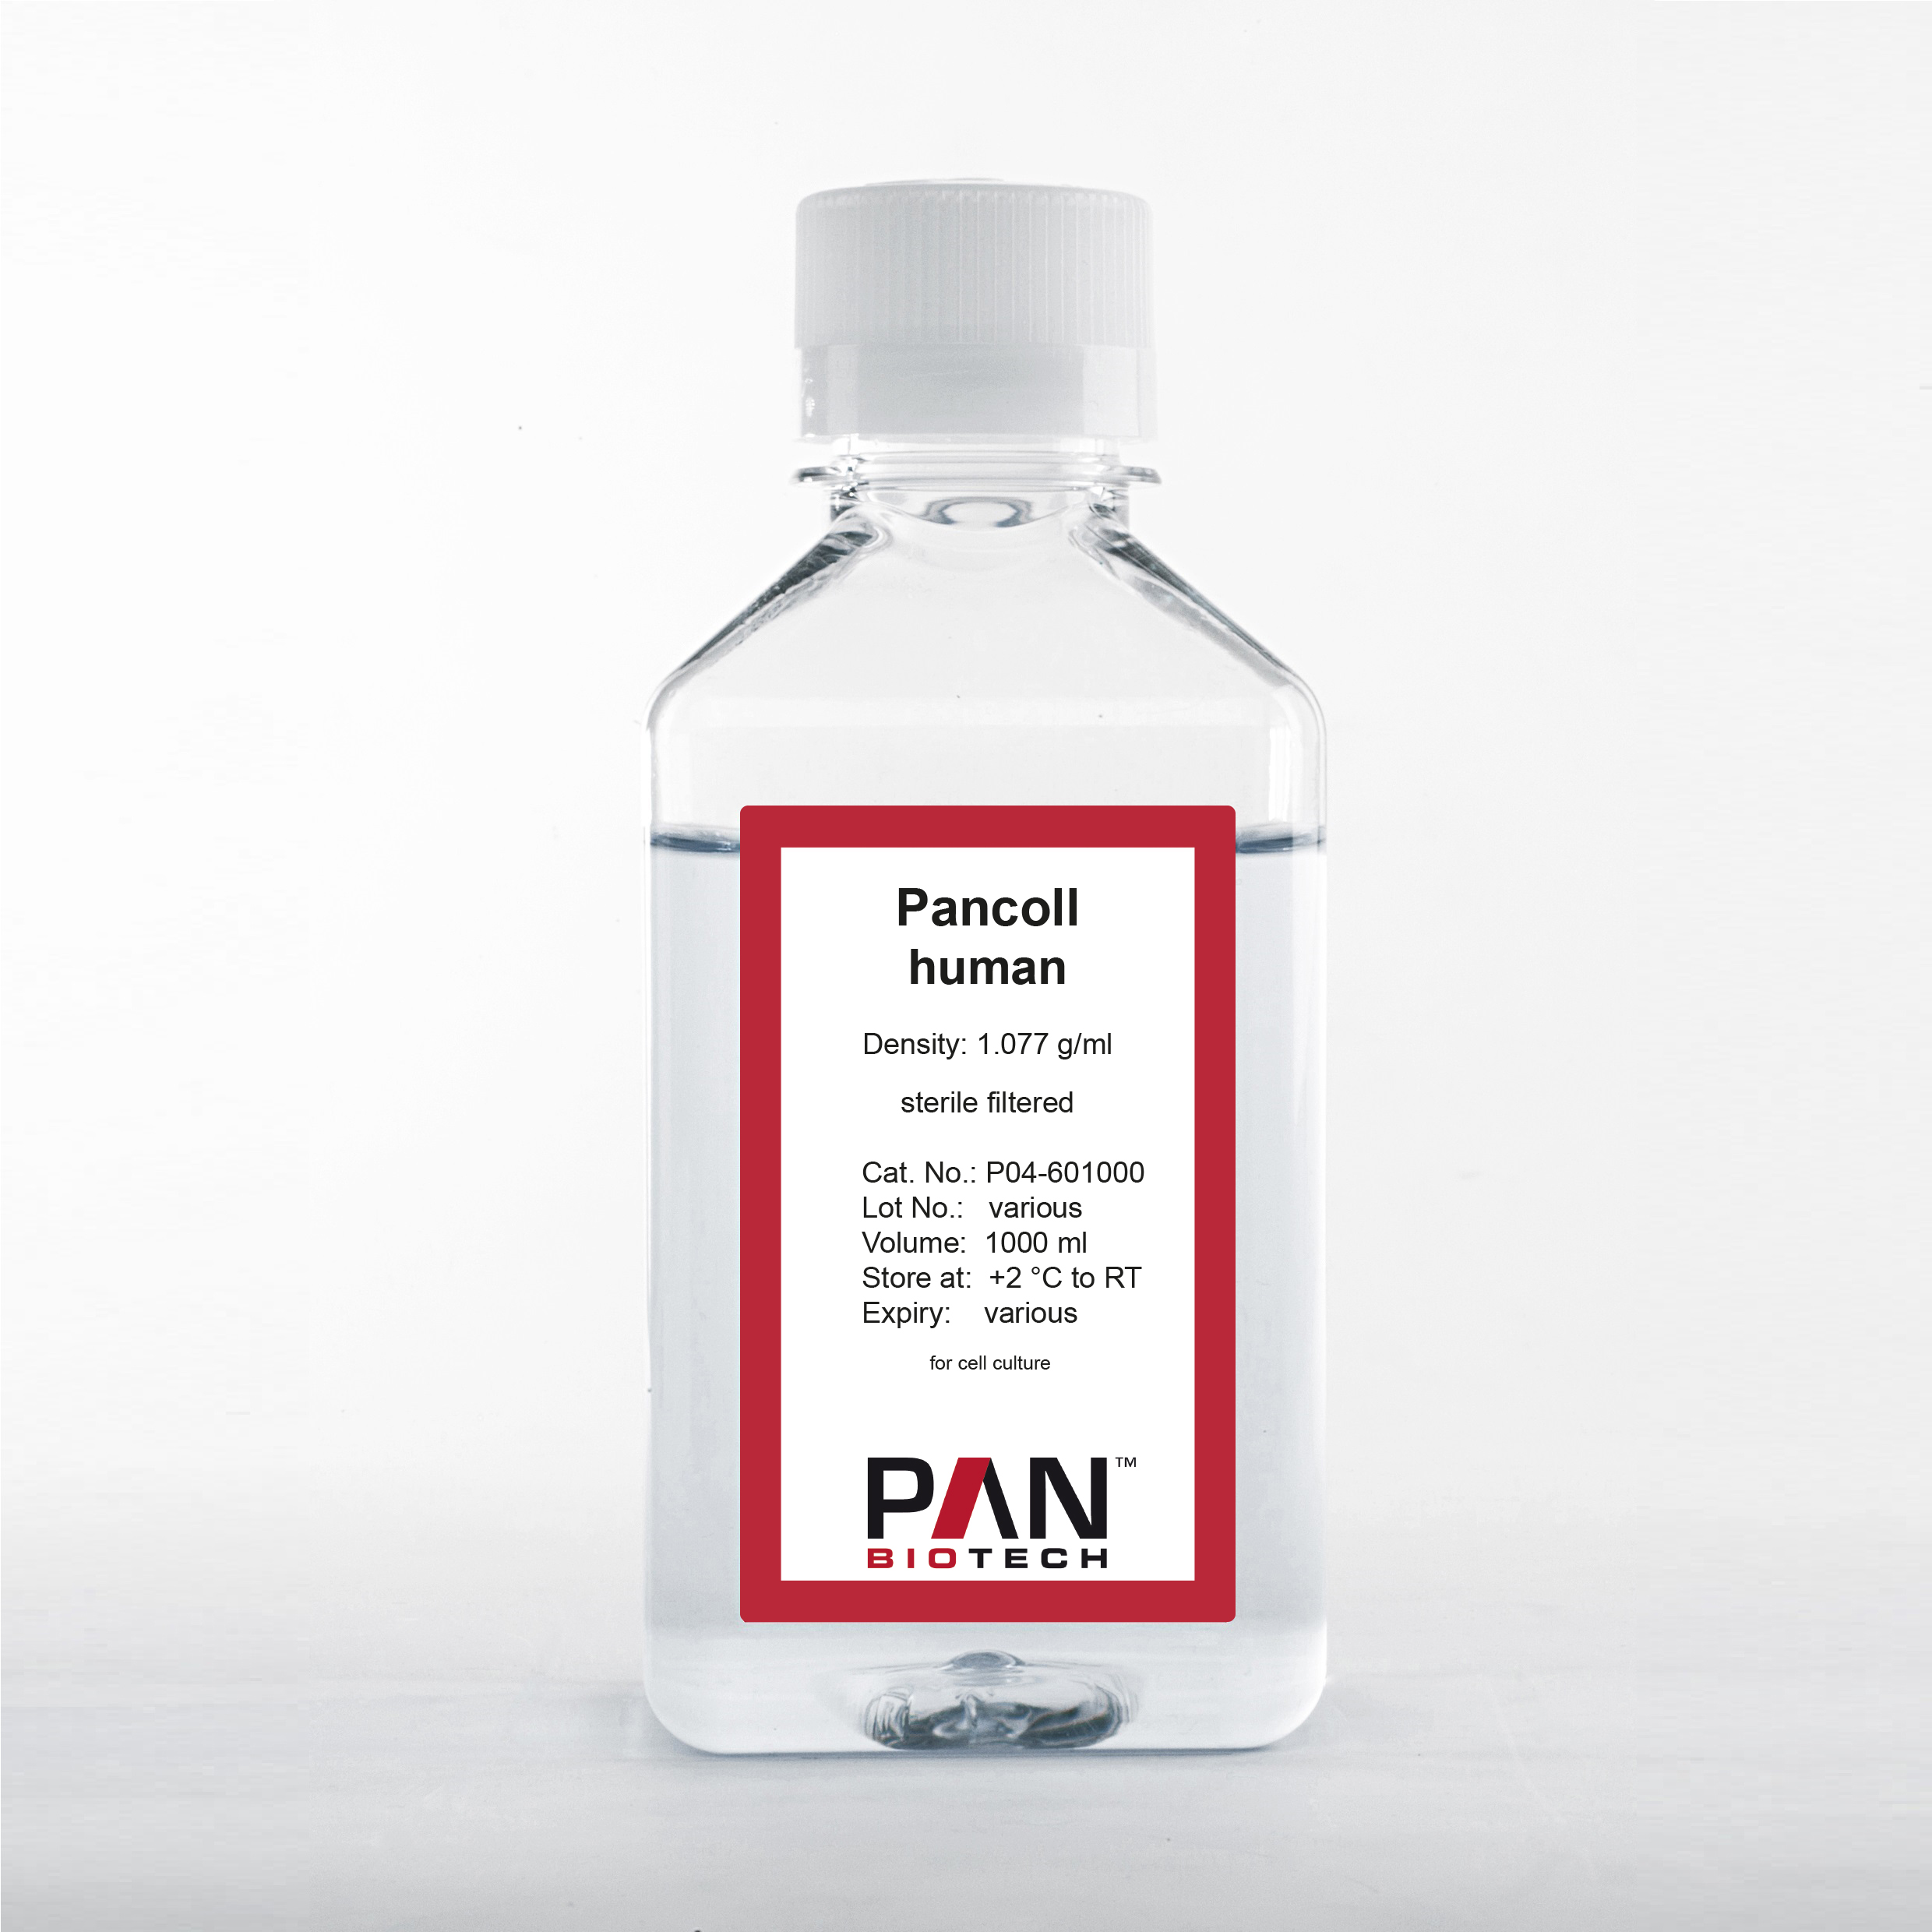 Pancoll human, Density: 1.077 g/ml